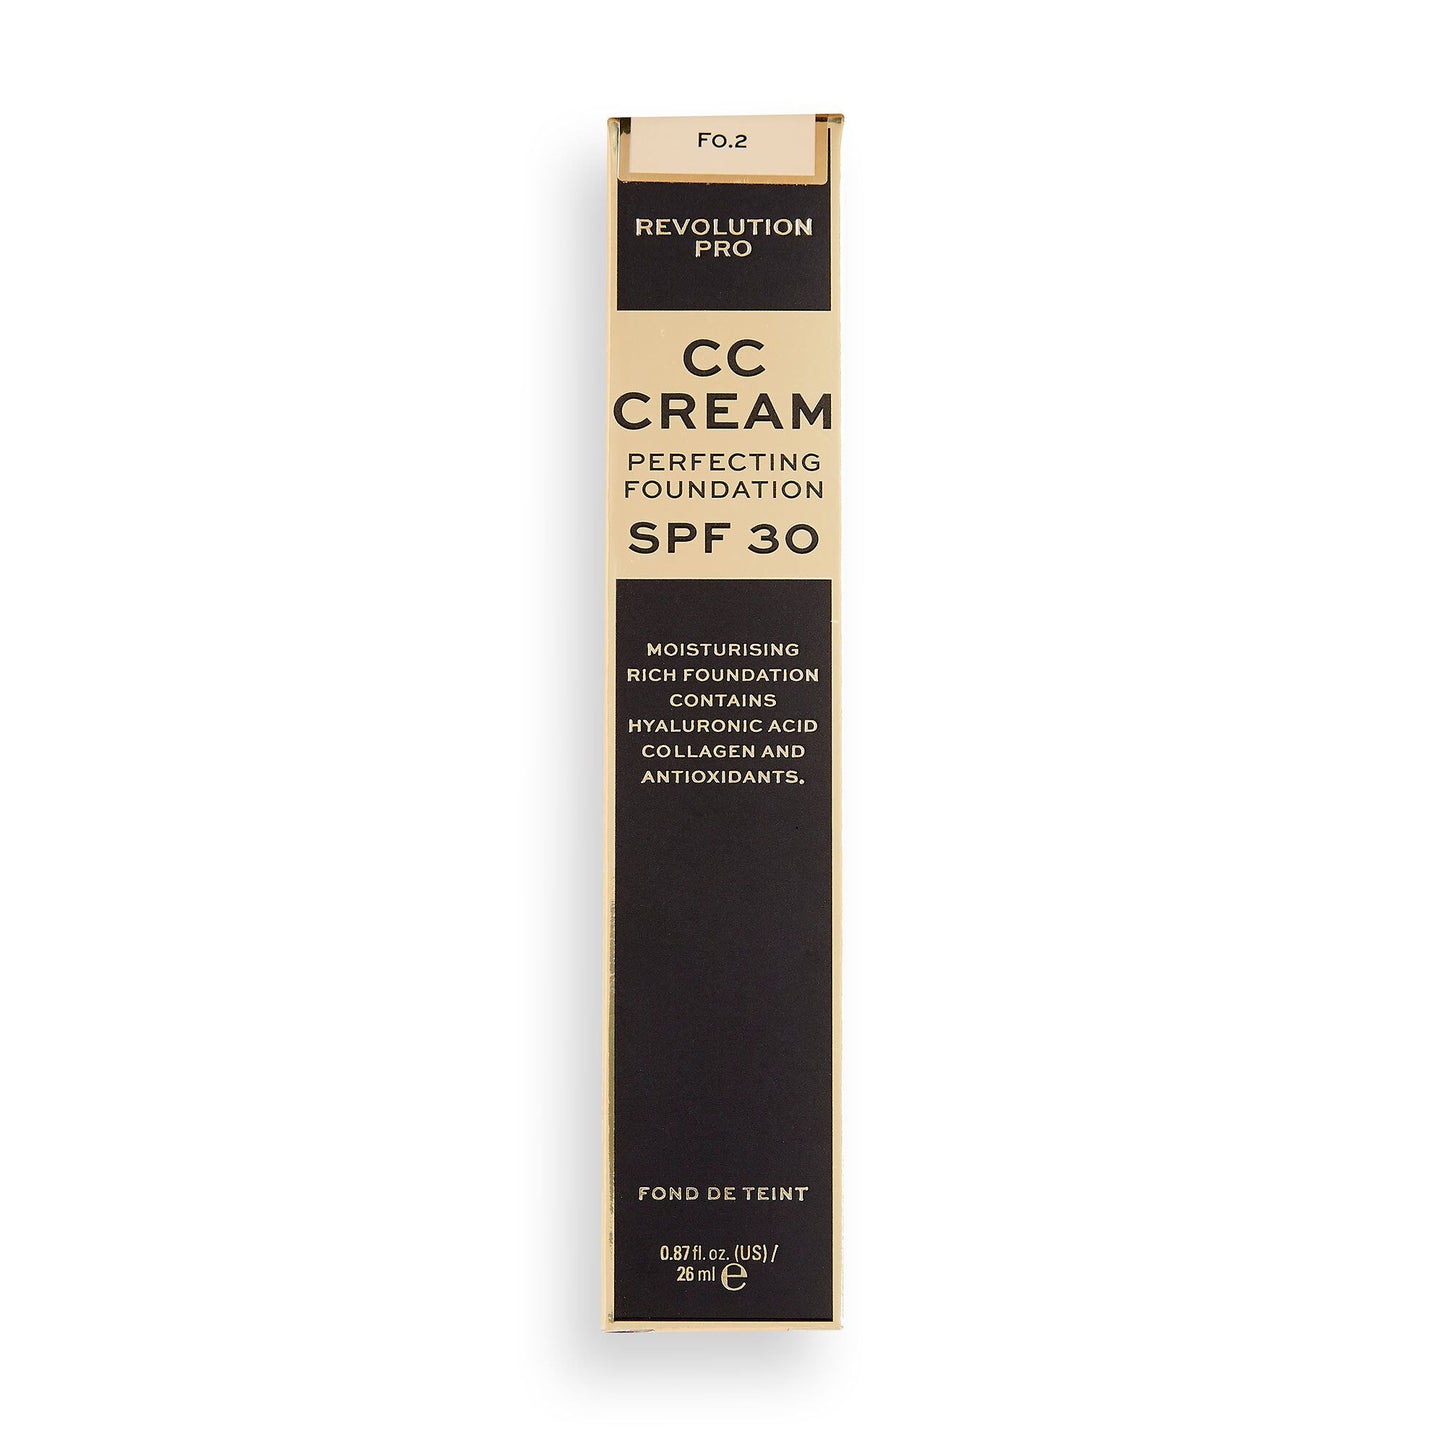 Revolution Pro CC Cream Perfecting Foundation SPF30 F0.2